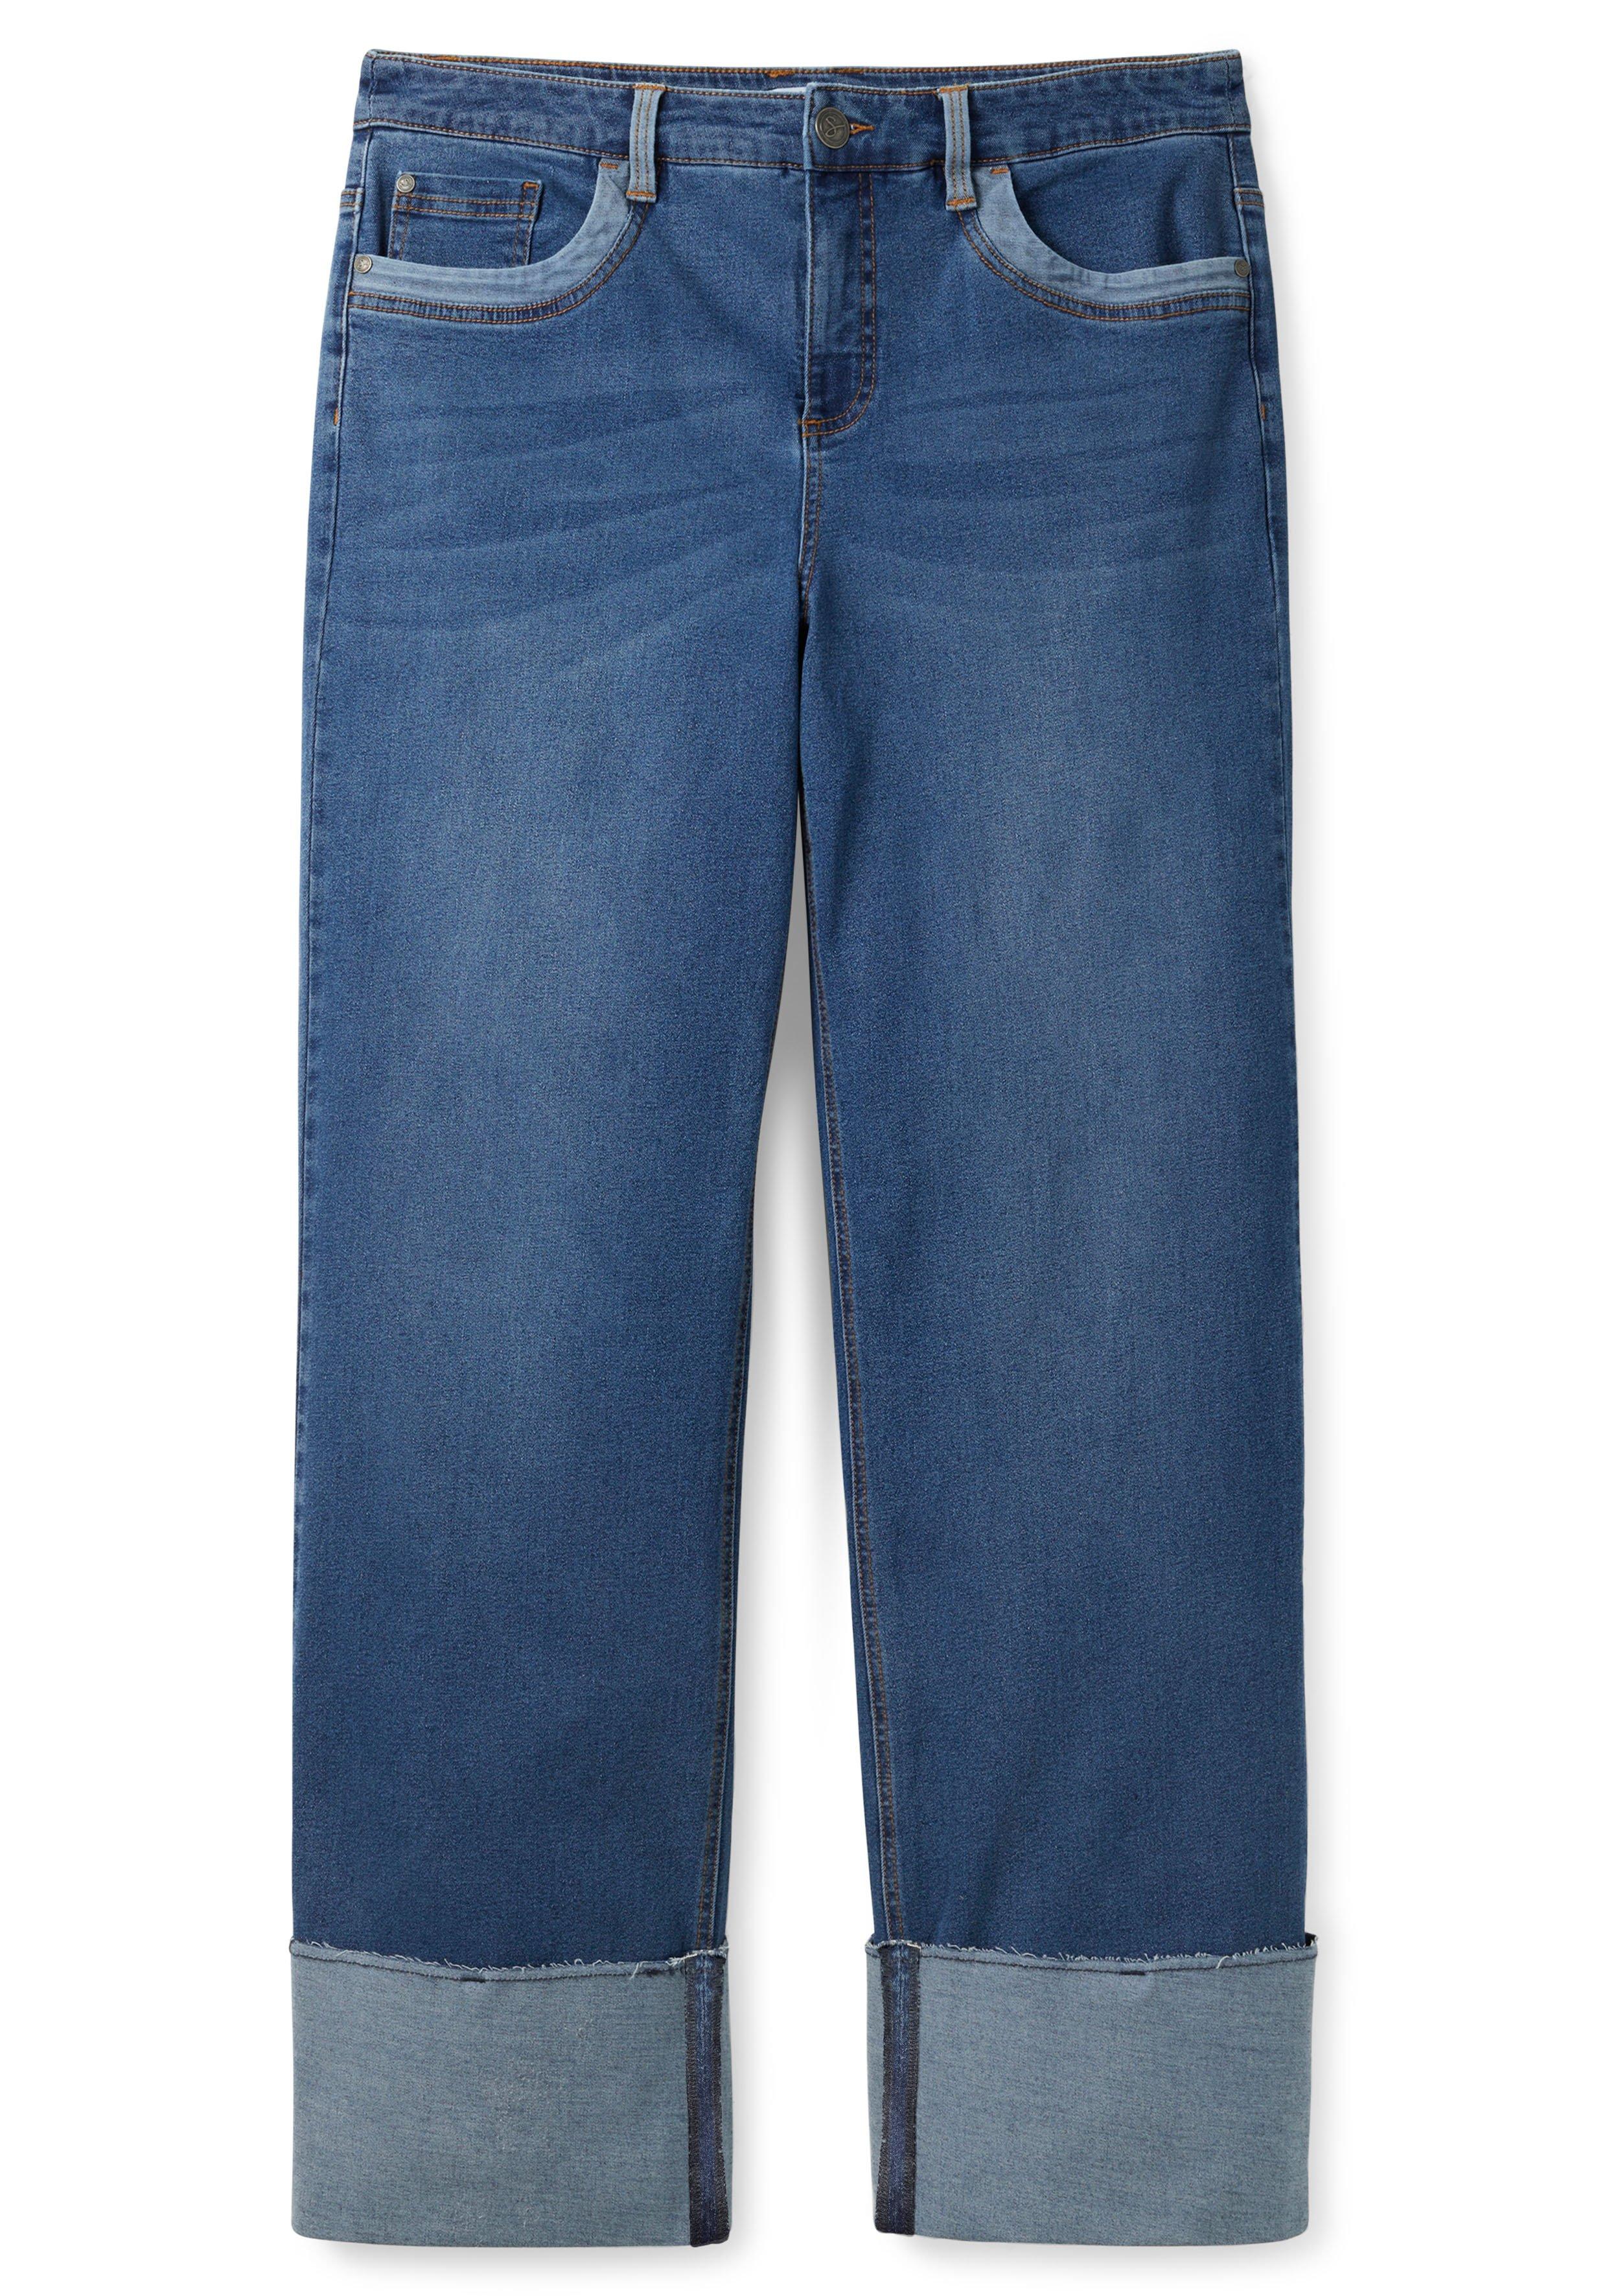 Jeansjacke in kurzer, kastiger Form mit Halbarm | - blue sheego Denim